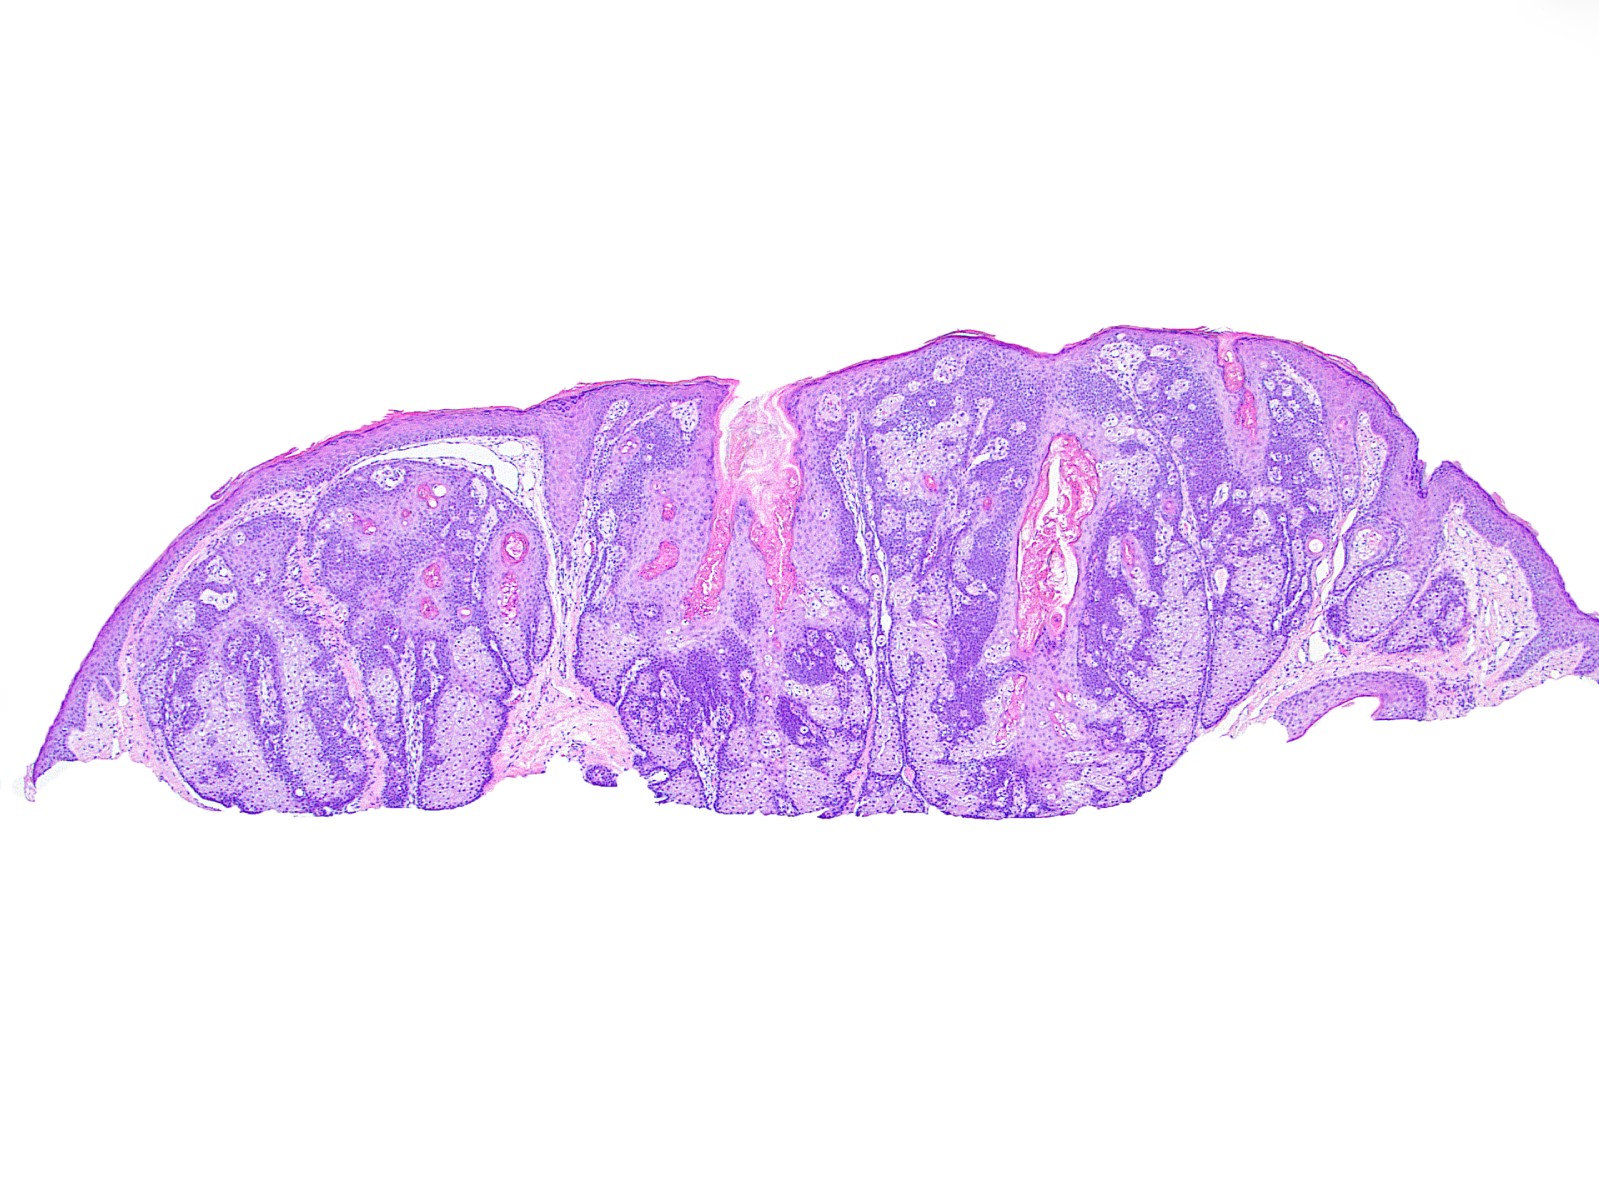 Peripherally basaloid, centrally clear lobules